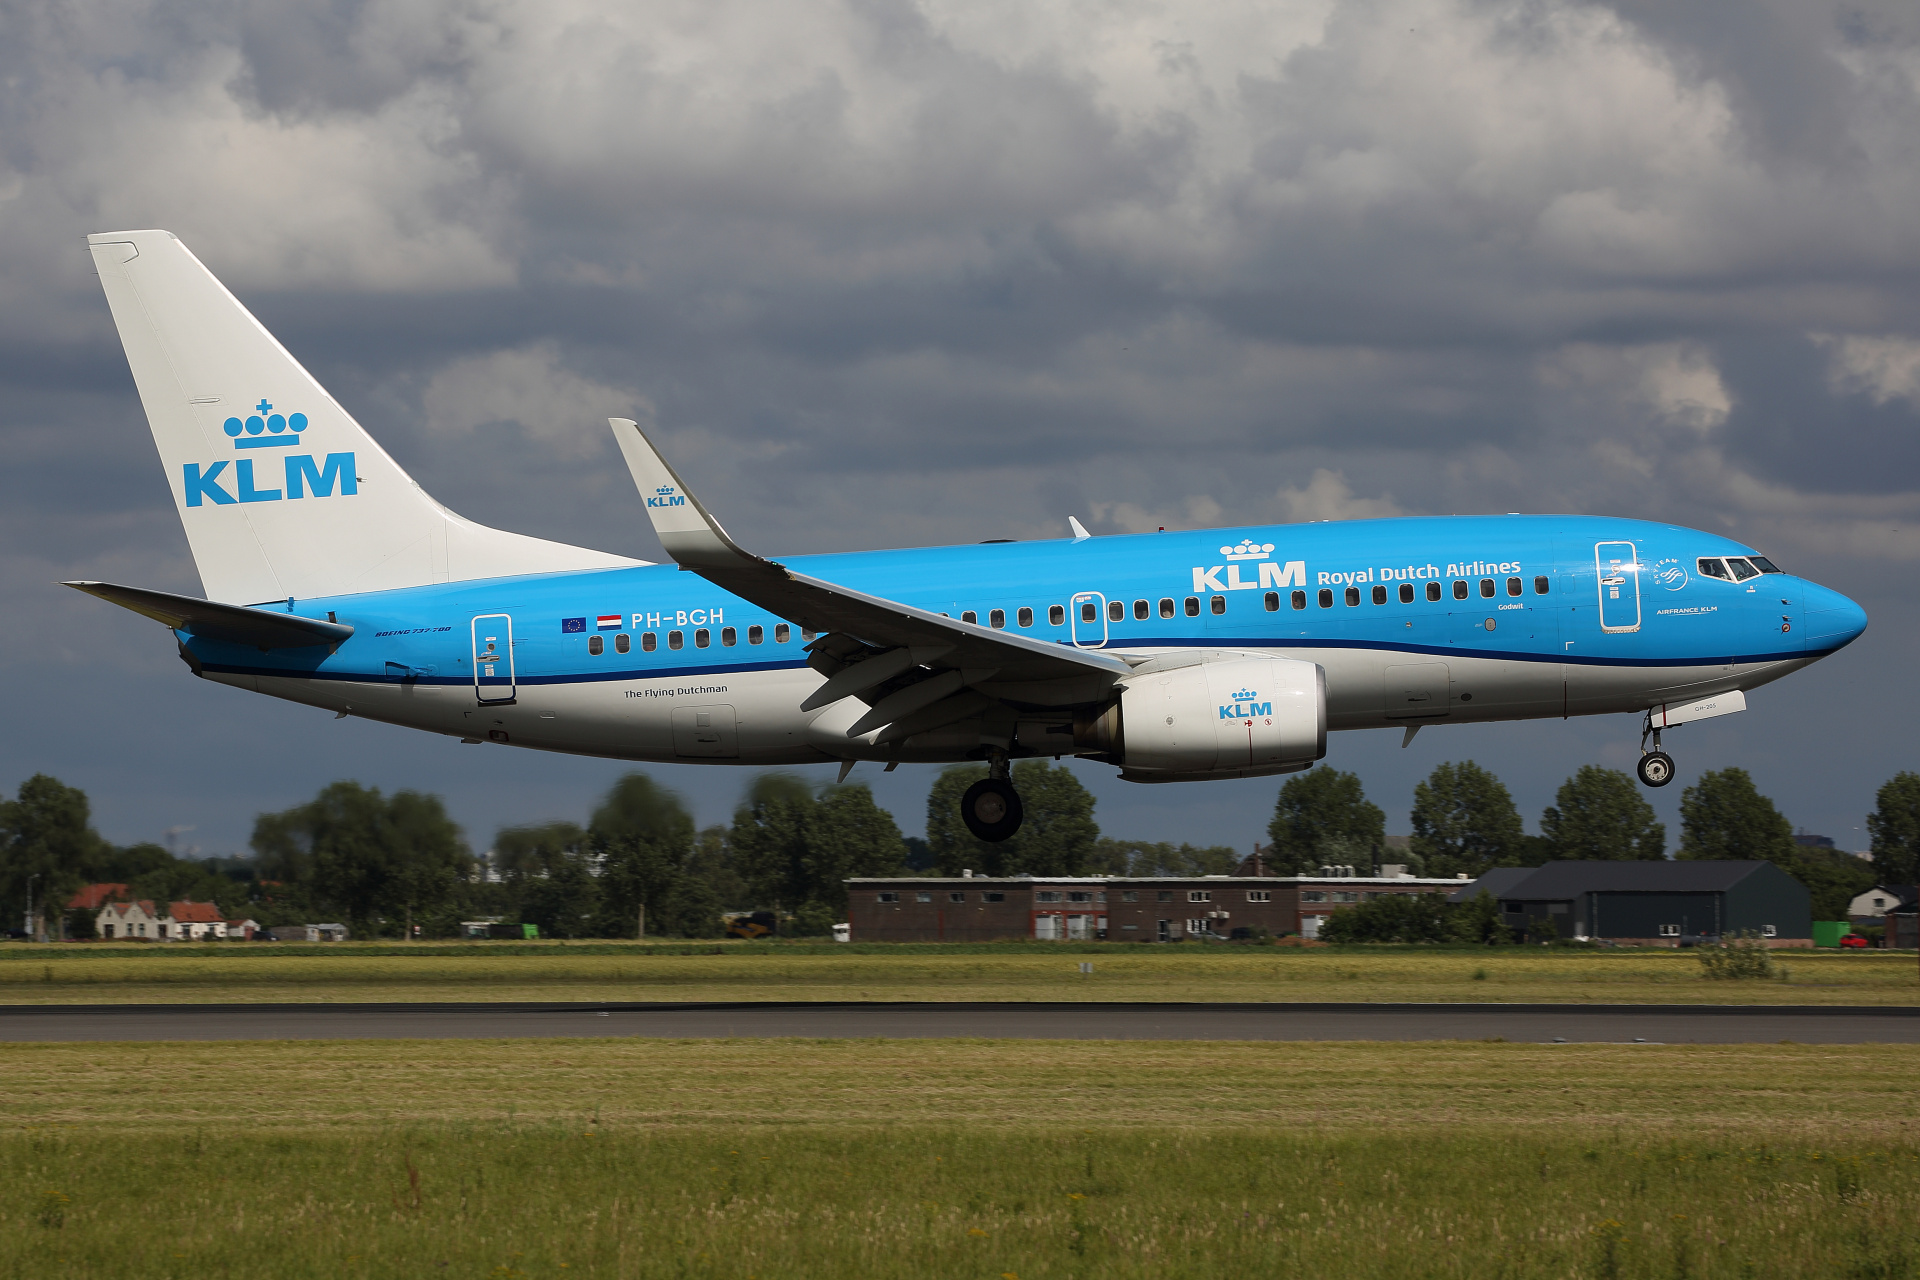 PH-BGH, KLM Royal Dutch Airlines (Aircraft » Schiphol Spotting » Boeing 737-700)